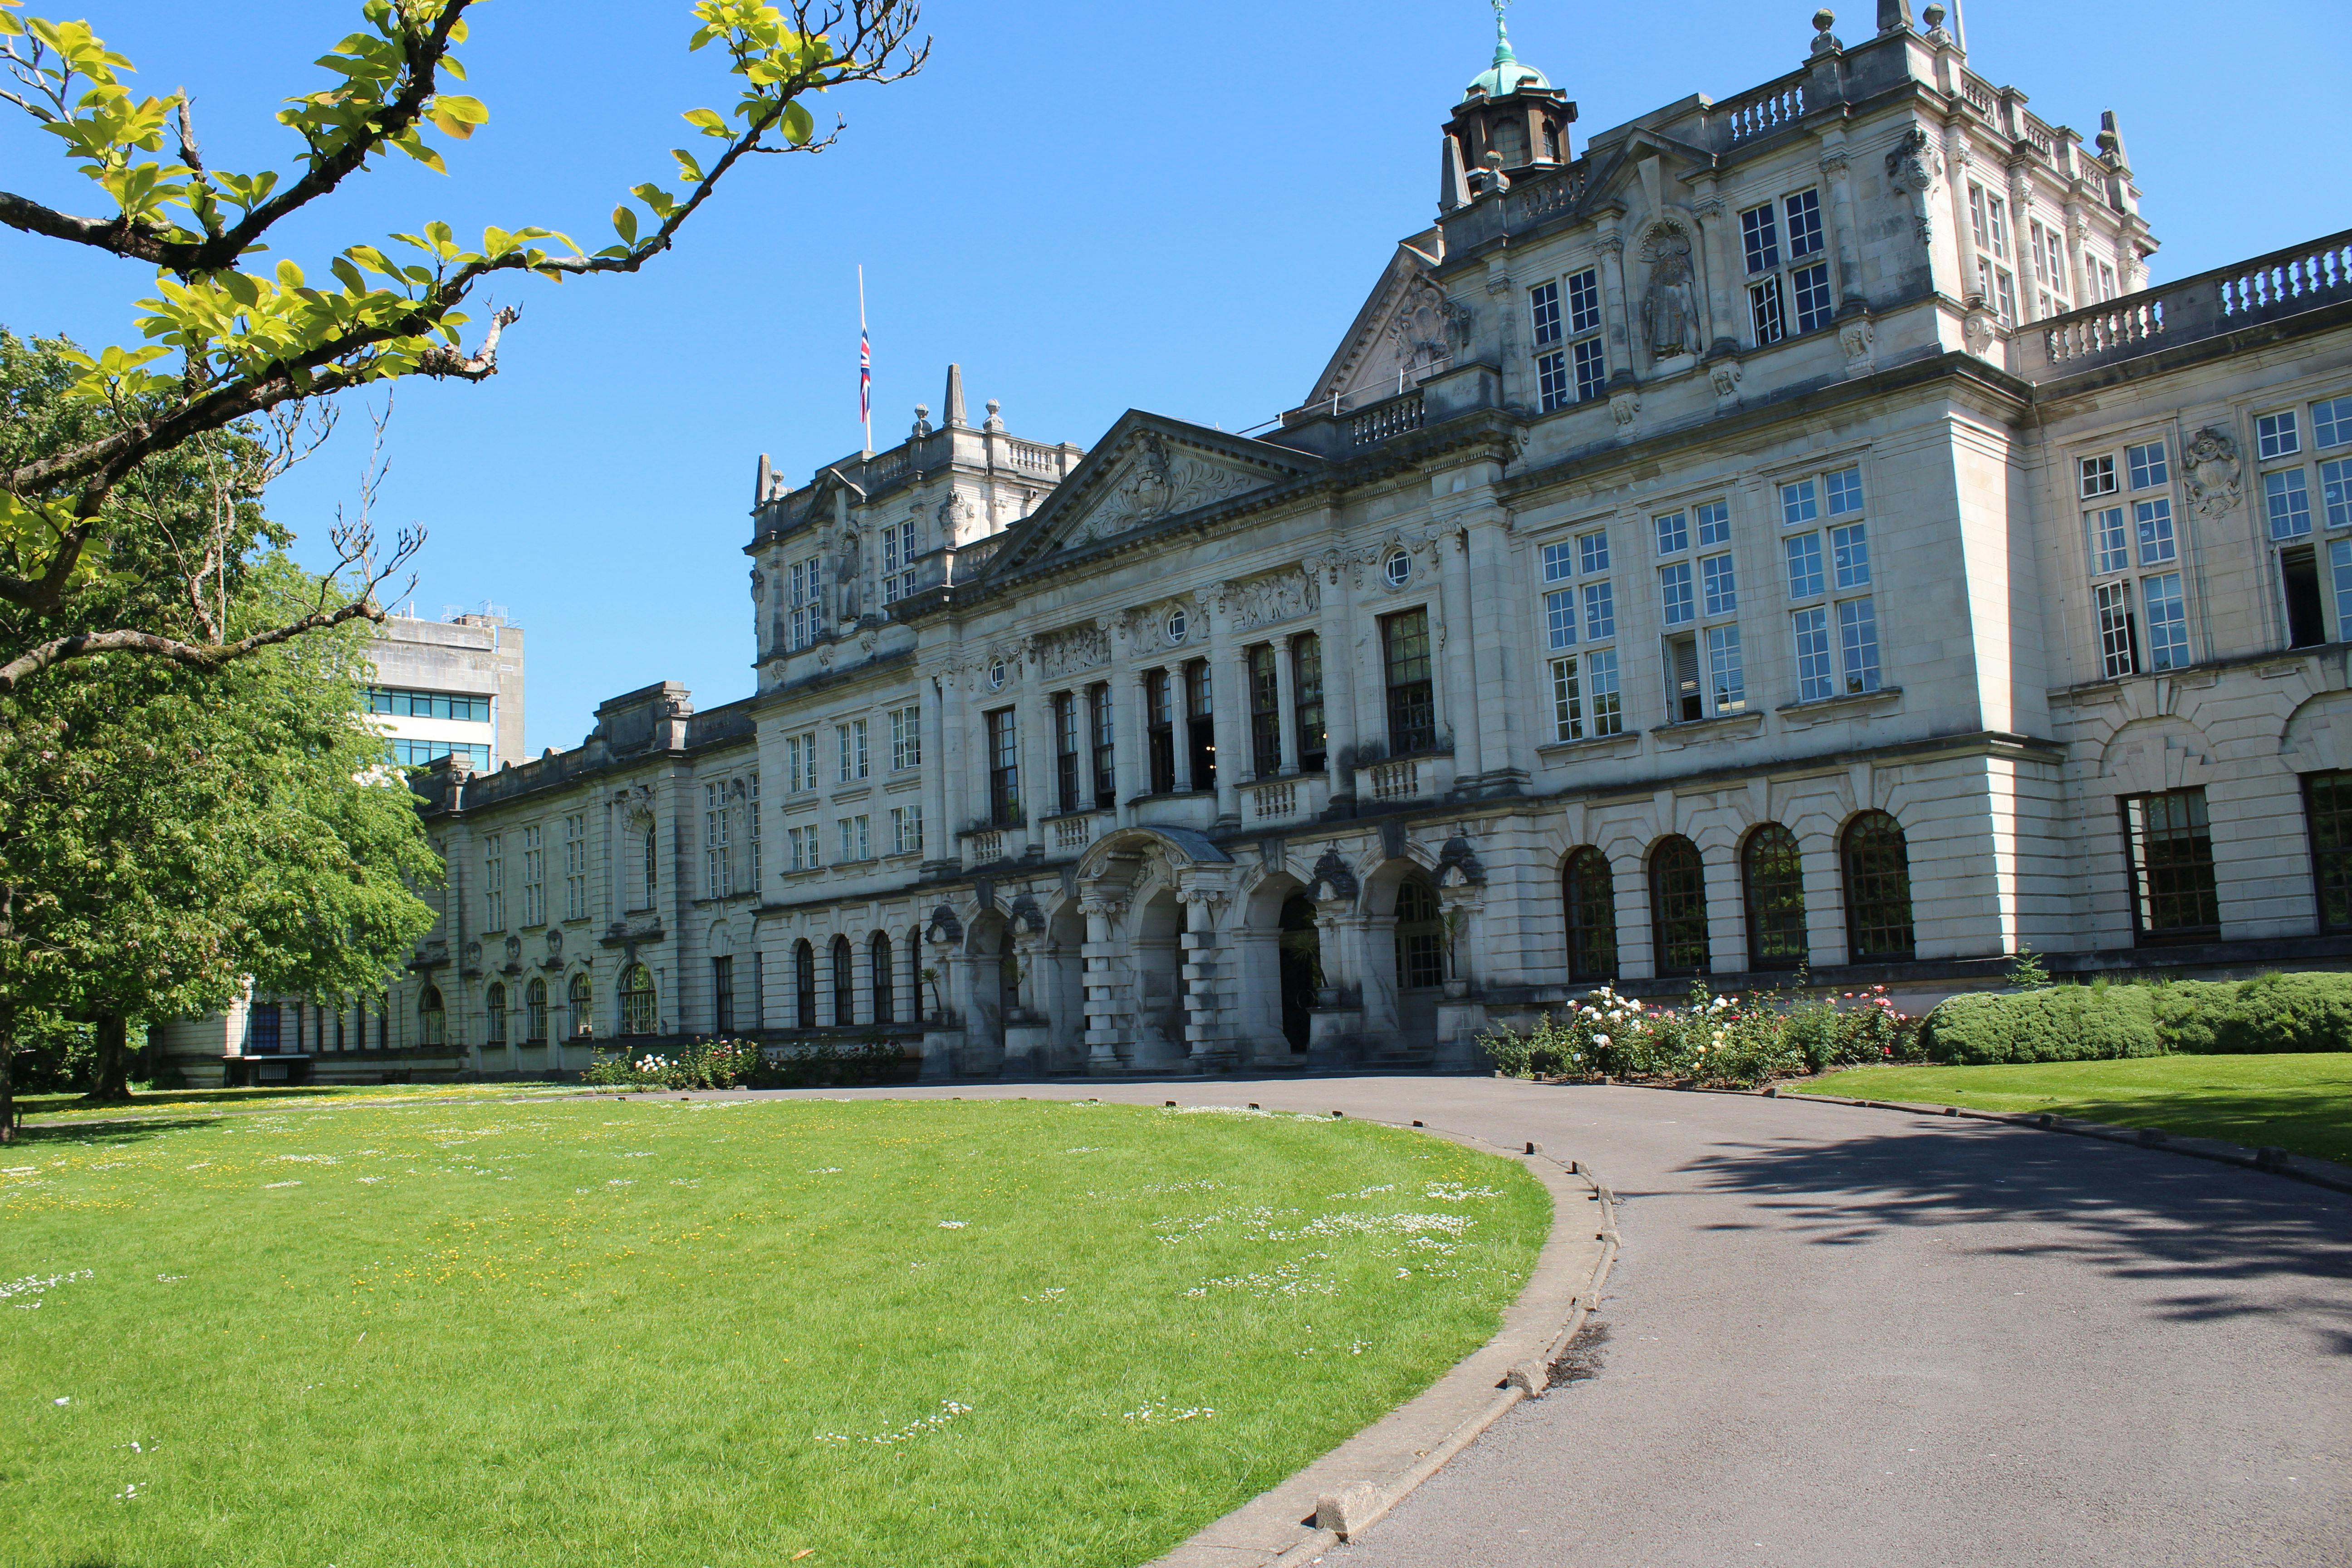 Private Tagestour durch Cardiff mit dem St. Fagans Museum, dem Cardiff Castle und der Cardiff Bay